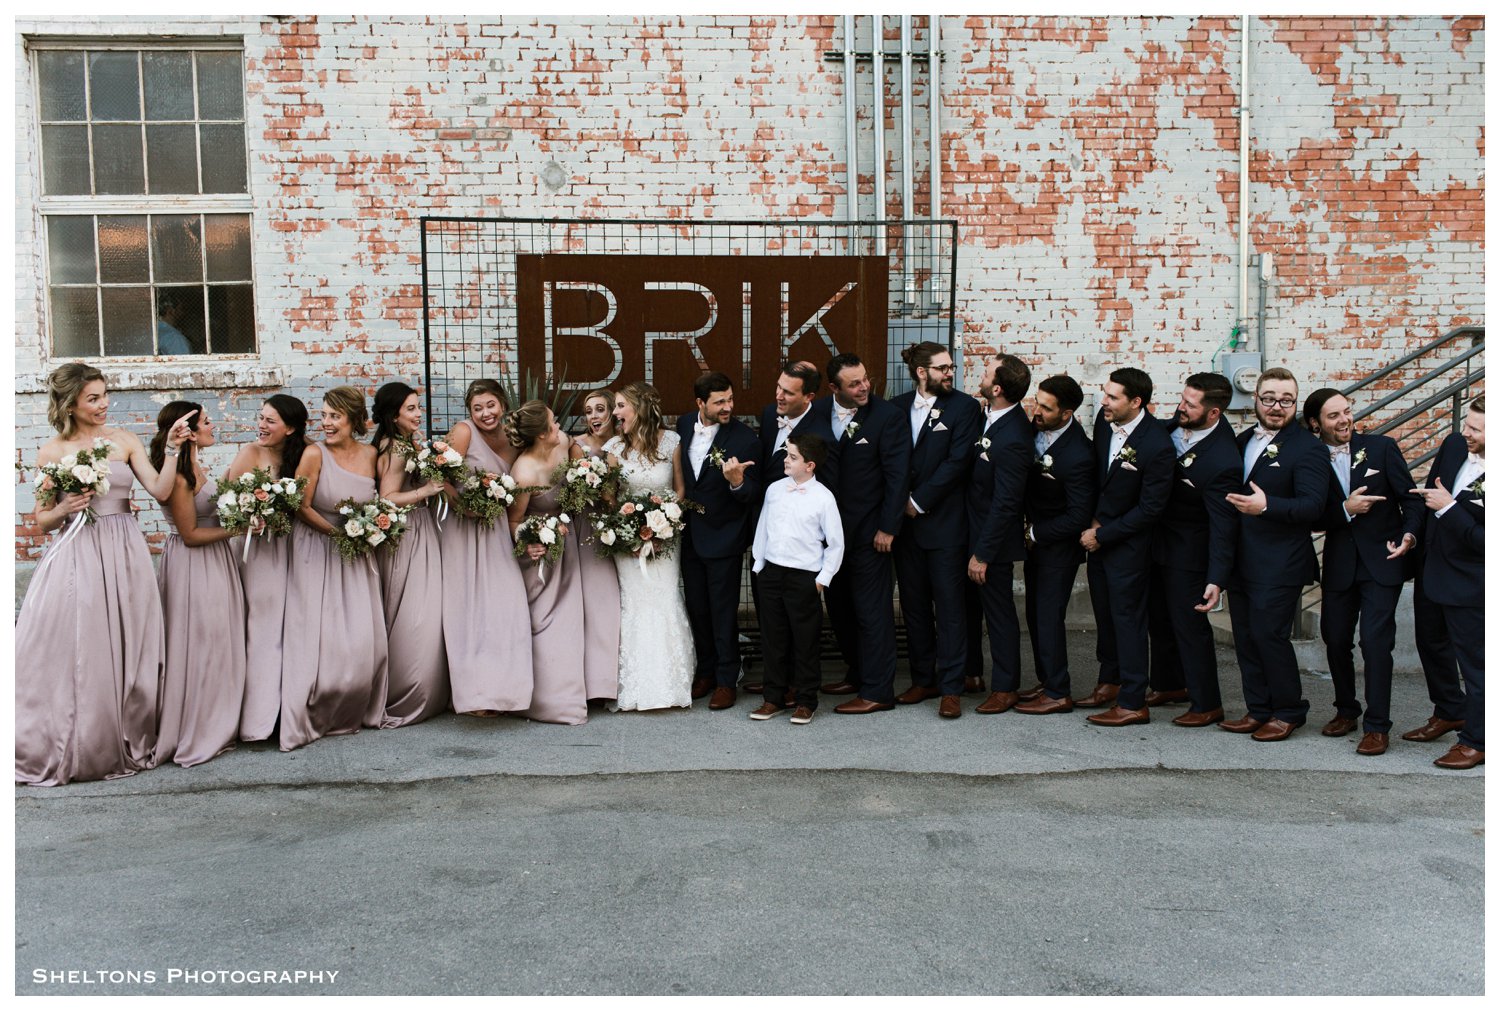 18-the-brik-fort-worth-wedding-photography.jpg